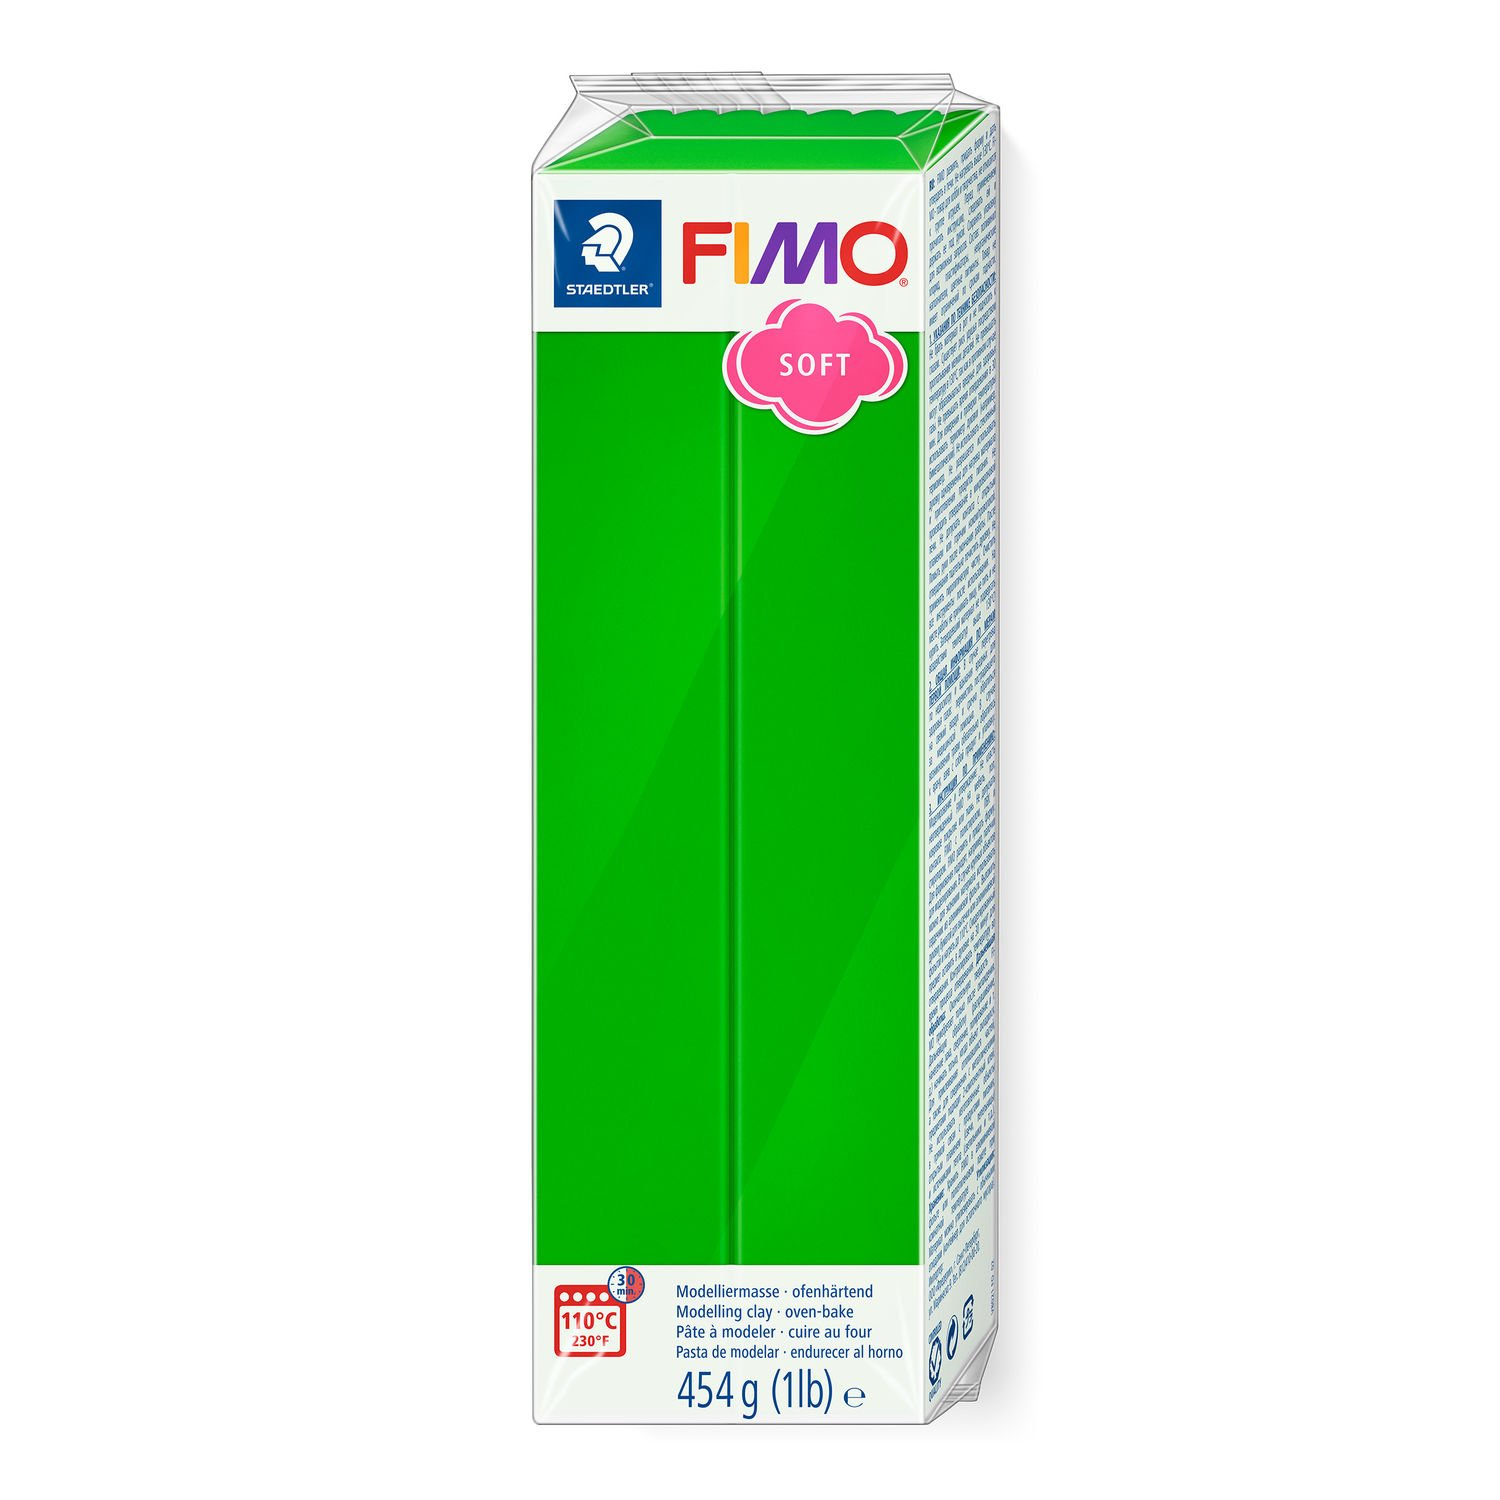 STAEDTLER FIMO 8021 - Modellierton - Grün - 1 Stück(e) - 1 Farben - 110 °C - 30 min